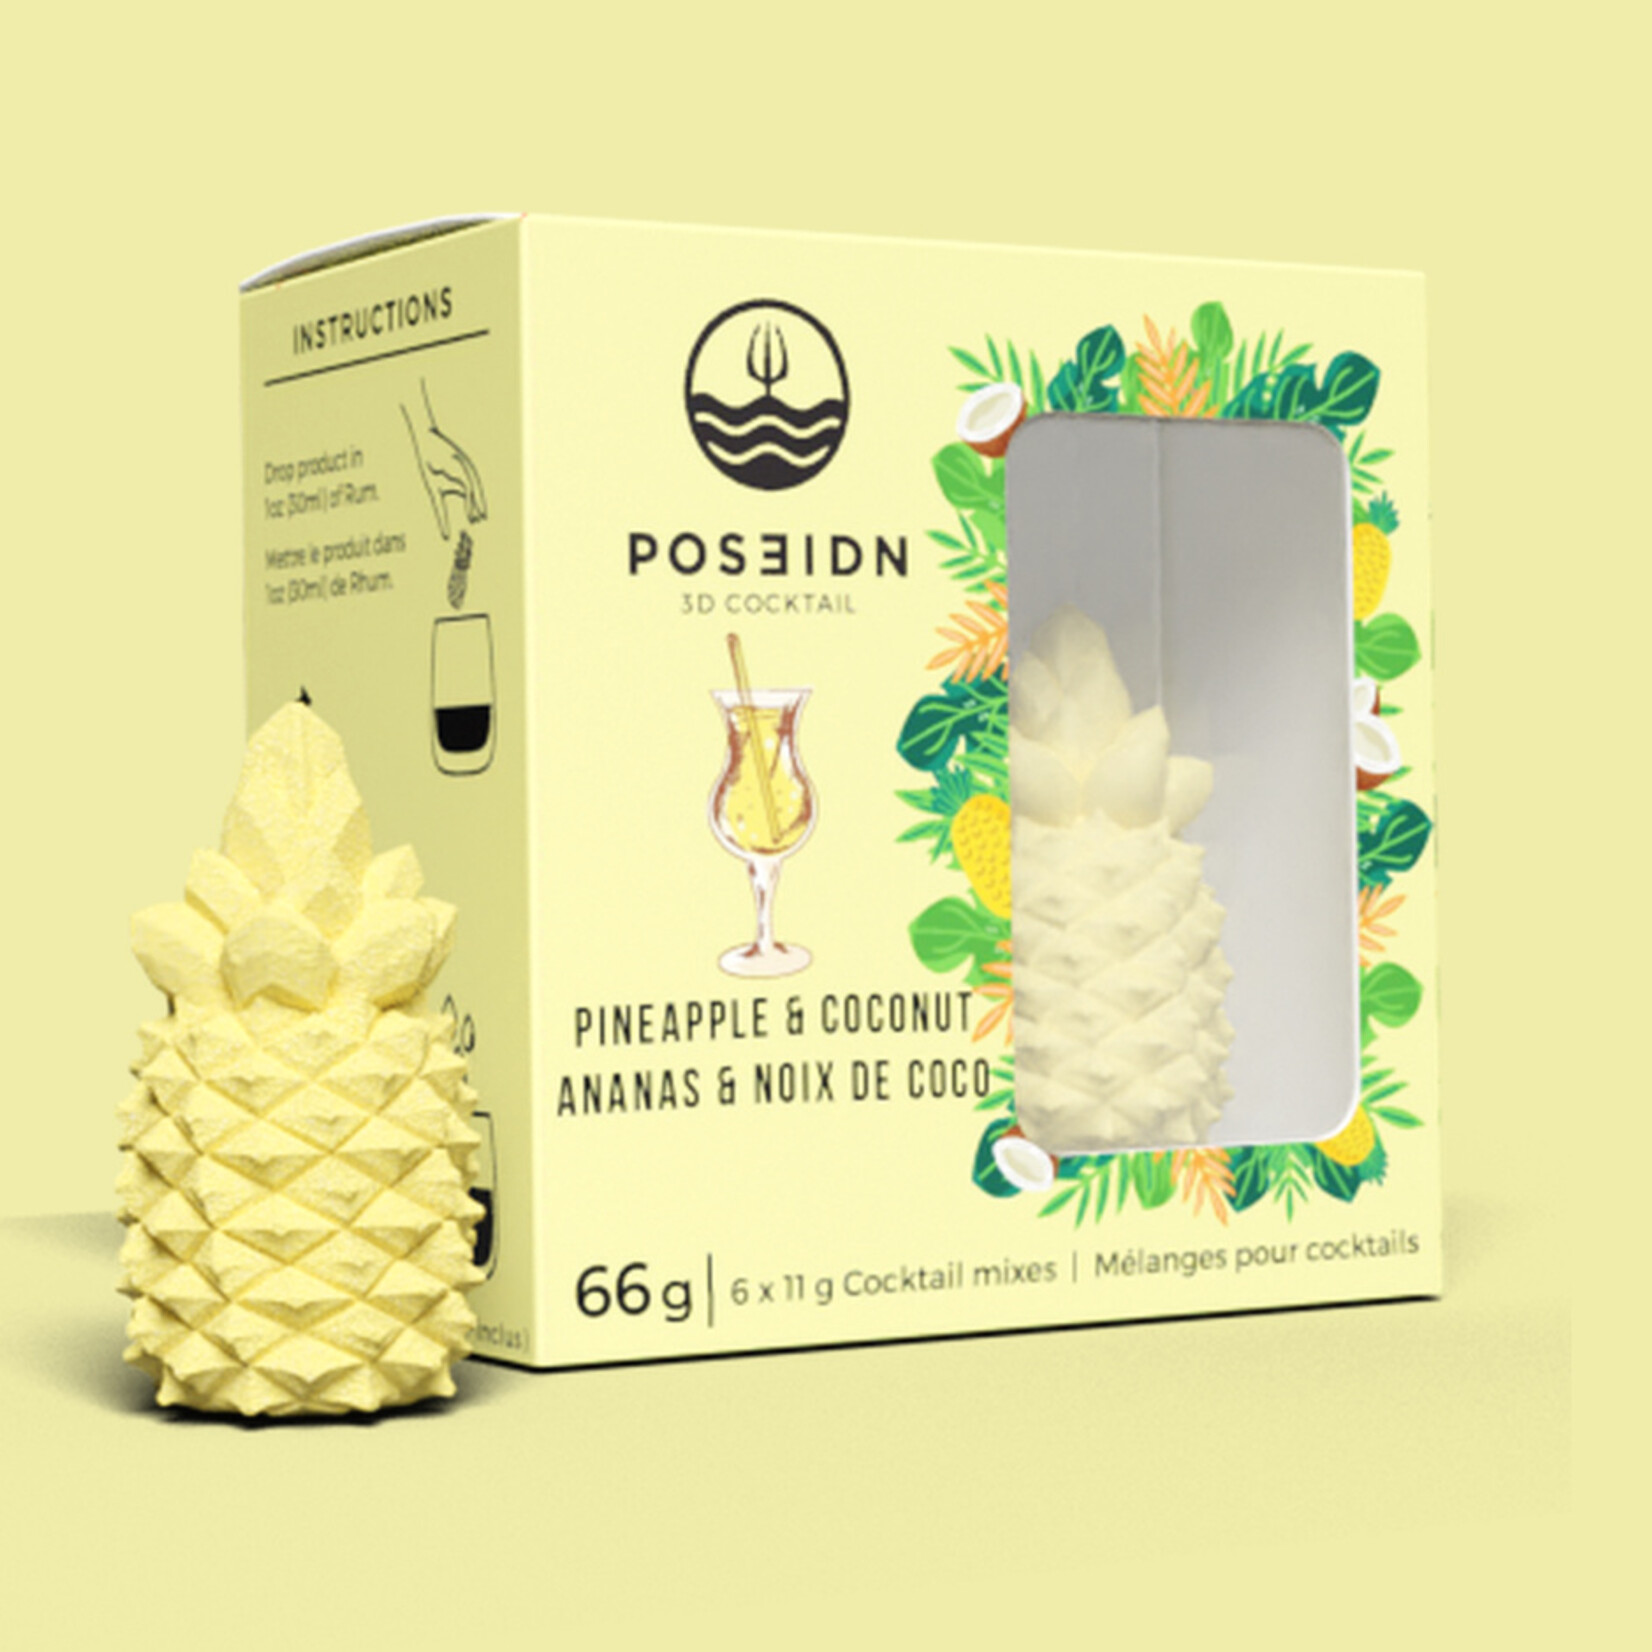 Poseidn Poseidn 3D Cocktail, Pineapple & Coconut